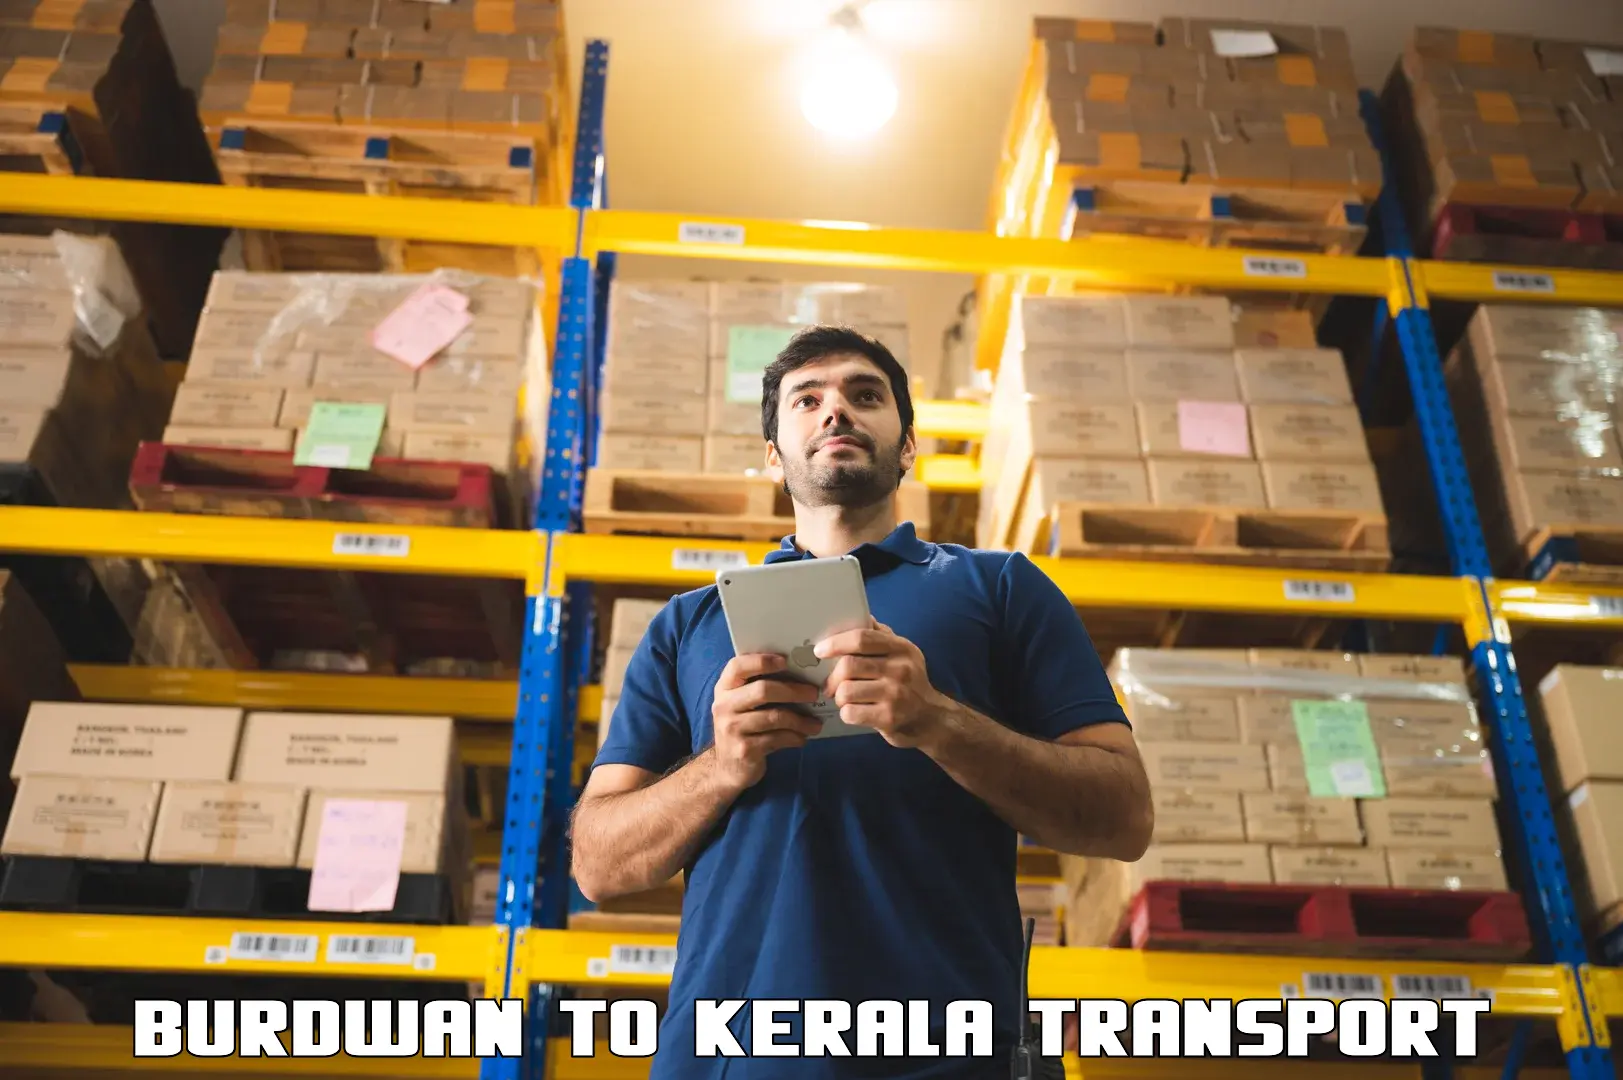 Delivery service Burdwan to Kochi